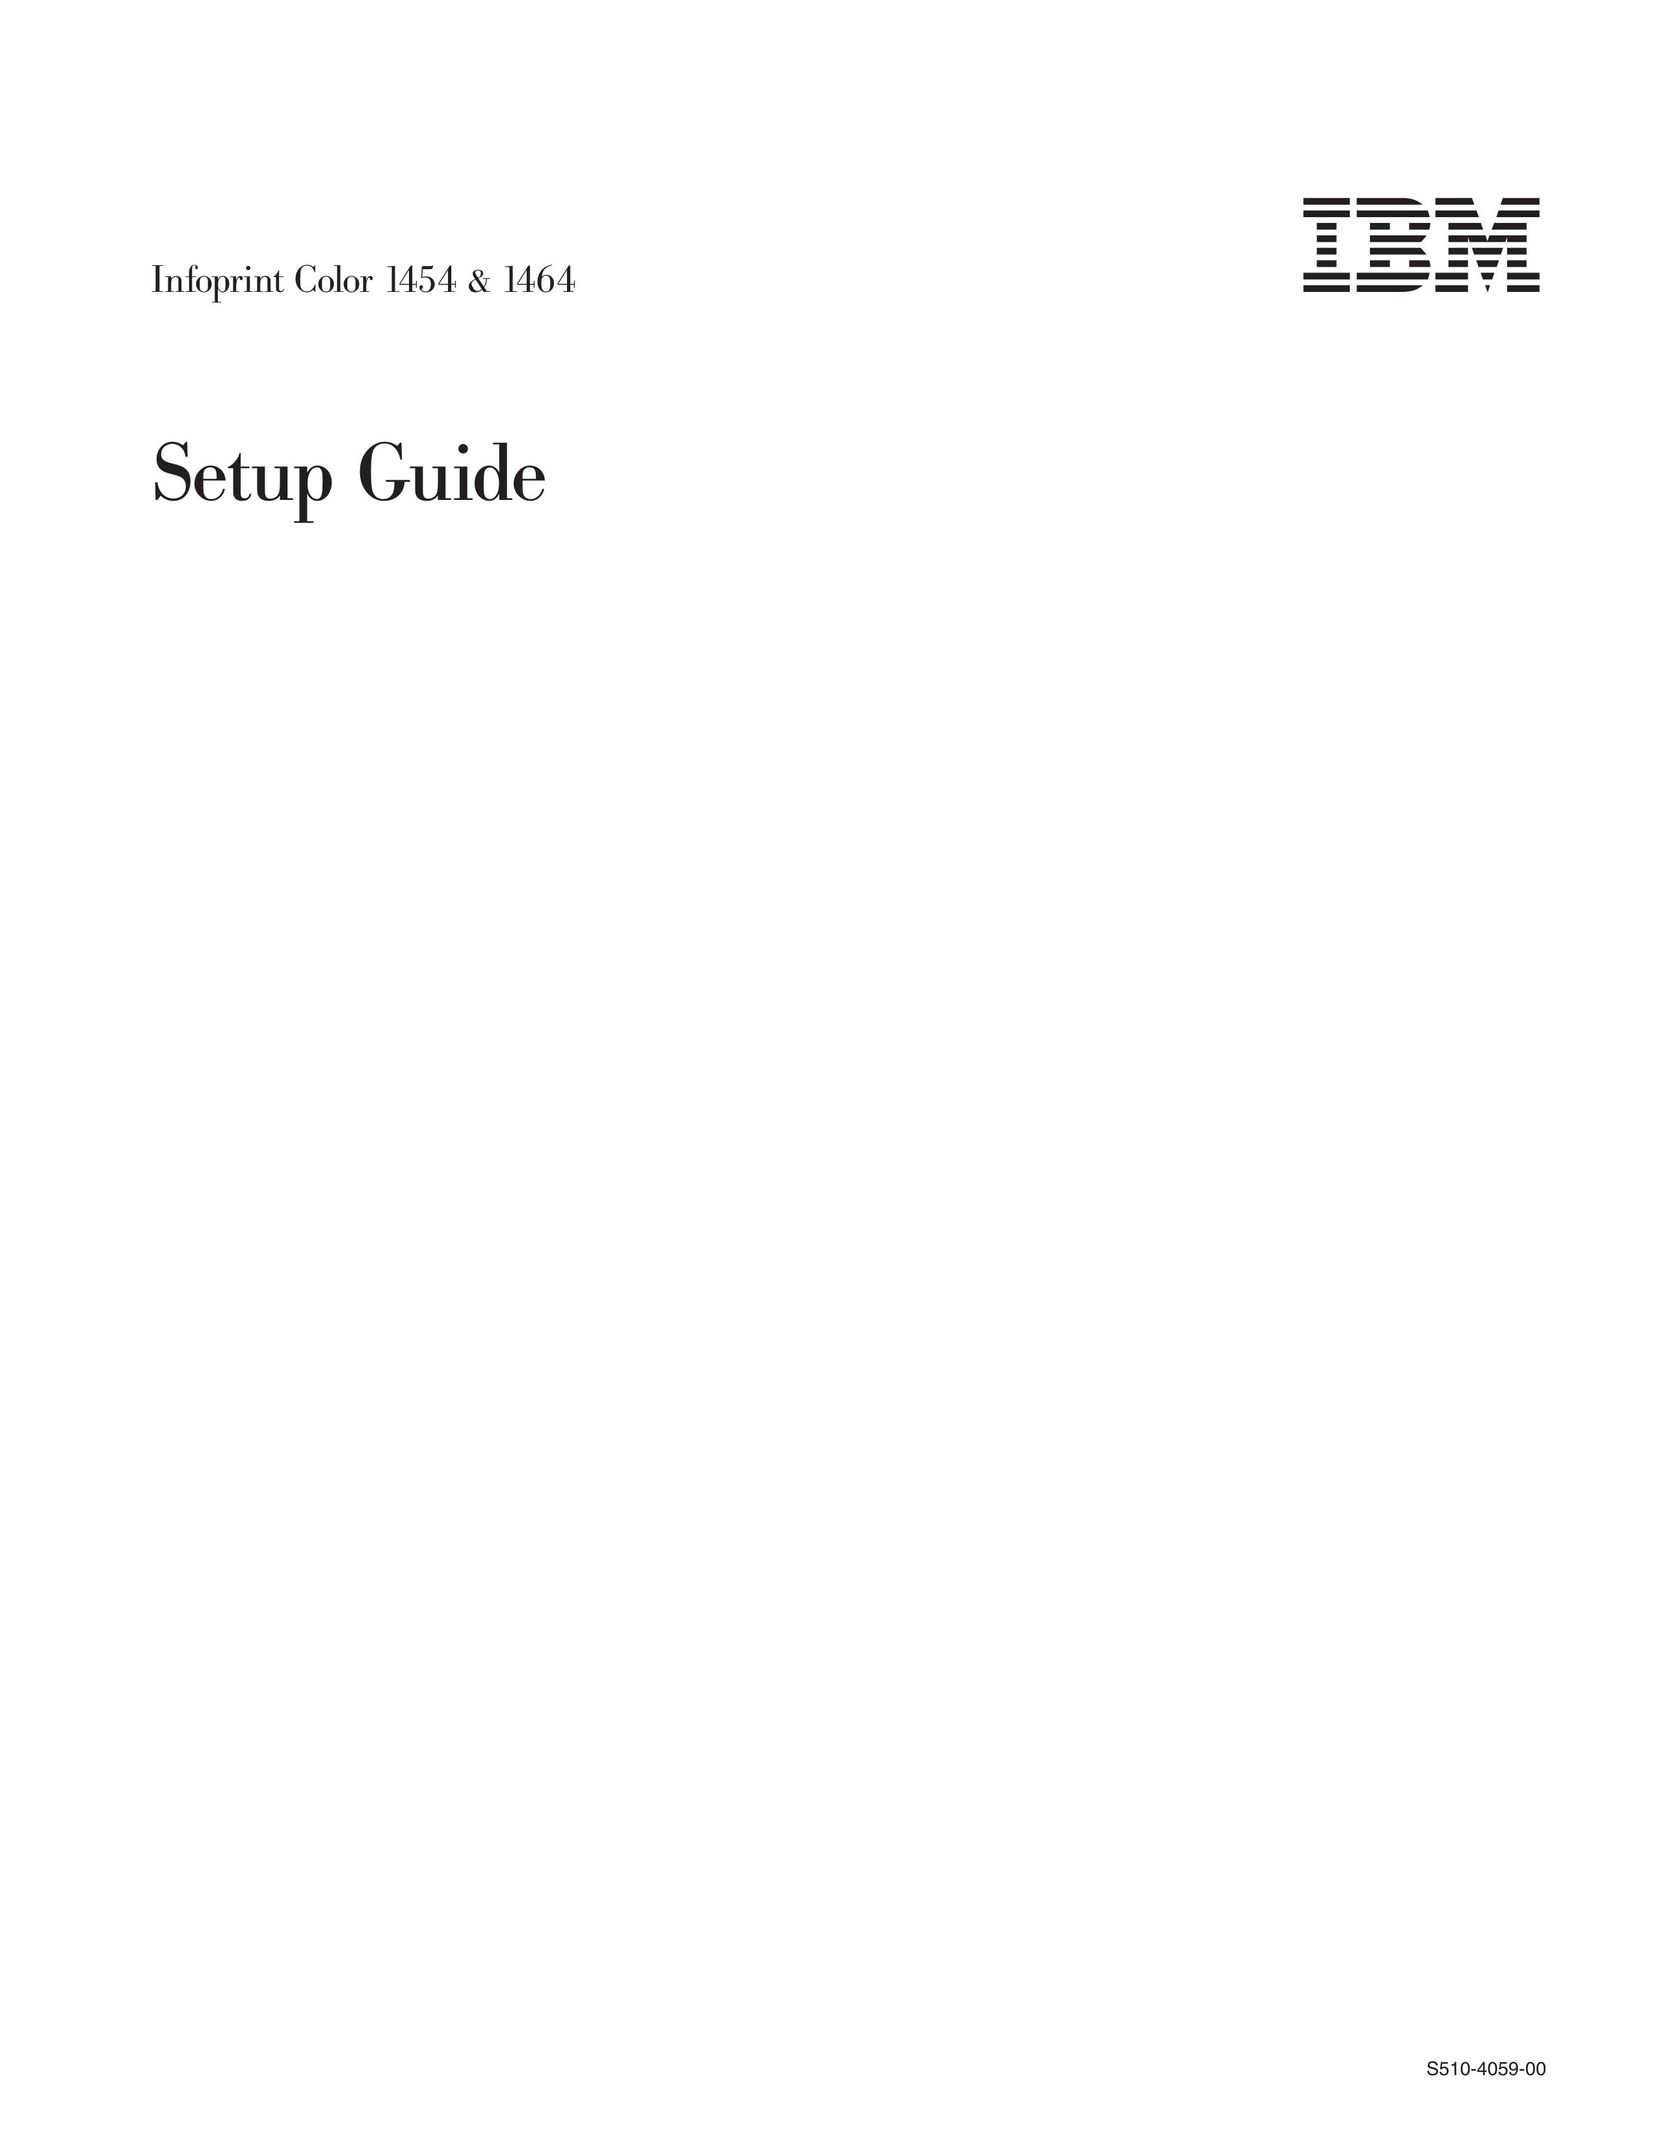 IBM Partner Pavilion 1454 Printer User Manual